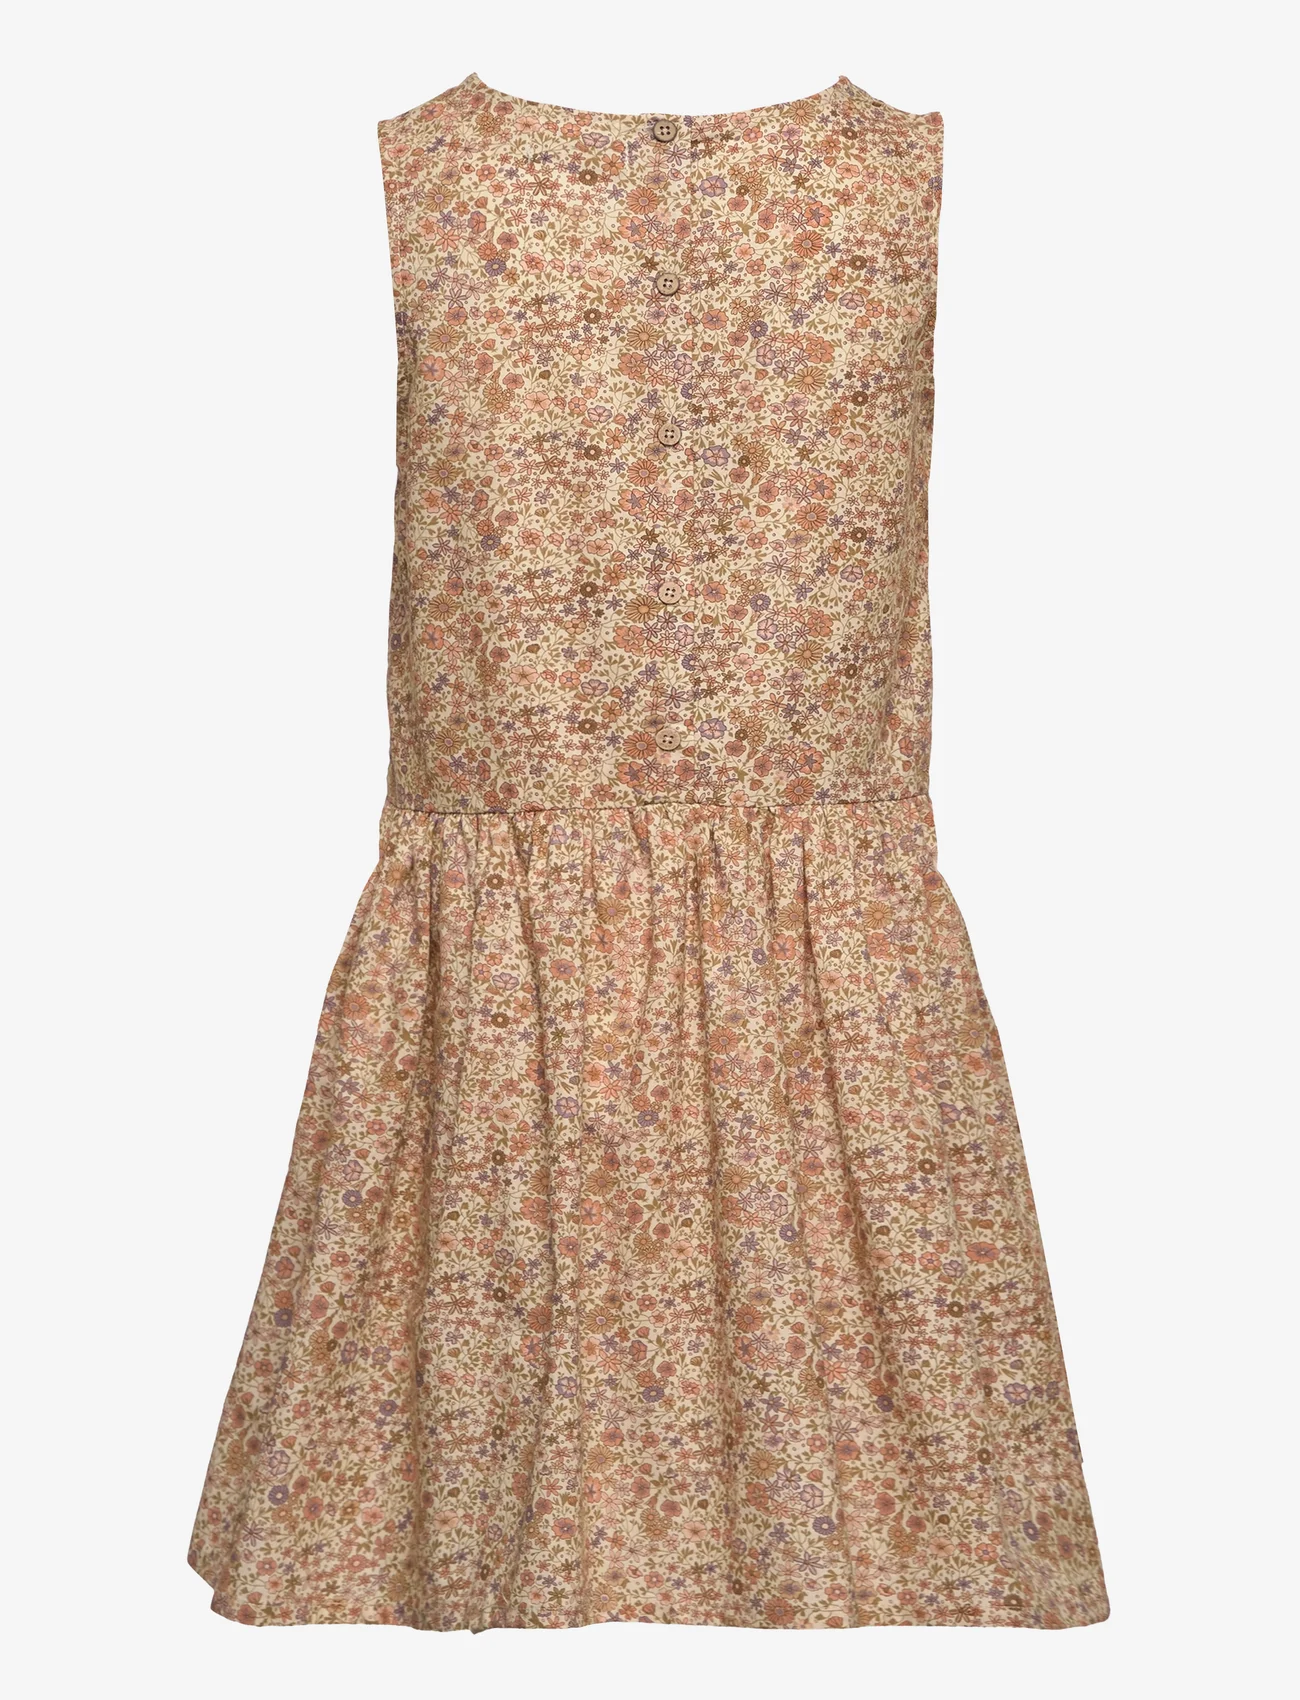 Wheat - Dress Sarah - sleeveless casual dresses - clam flowers - 1